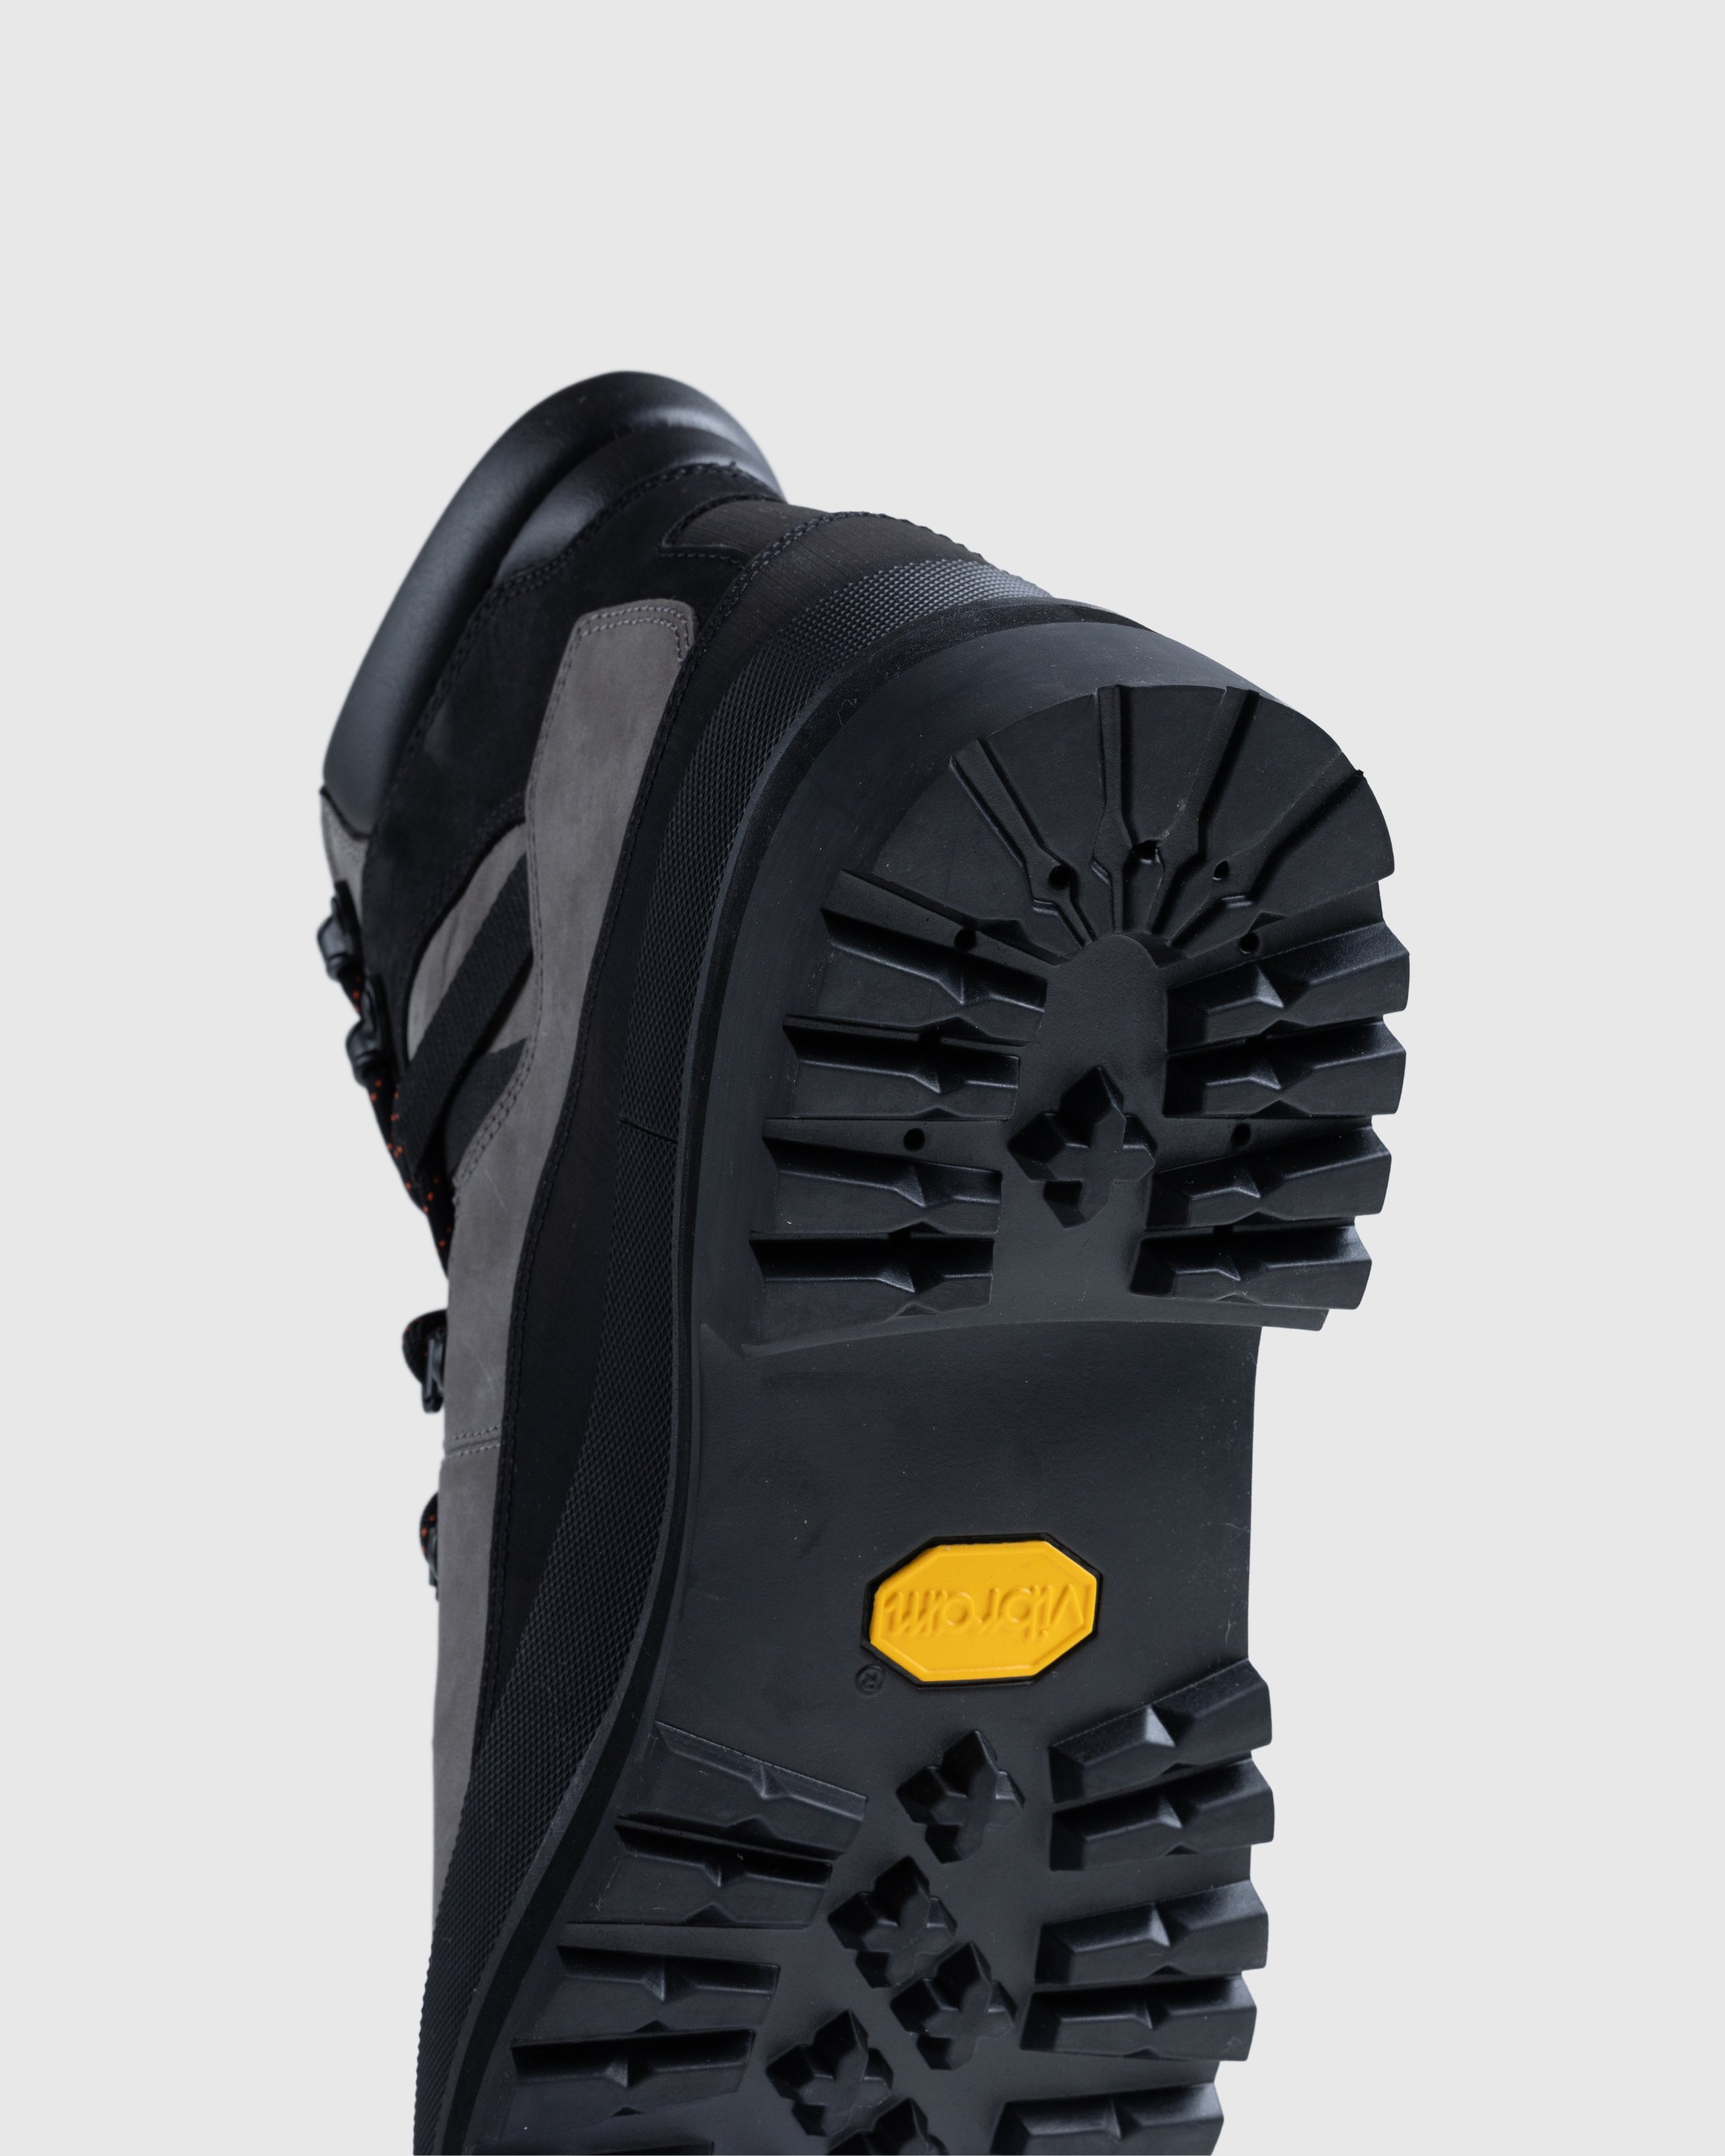 Timberland - MID LACE UP WATERPROOF BOOT CASTLEROCK - Footwear - Grey - Image 6